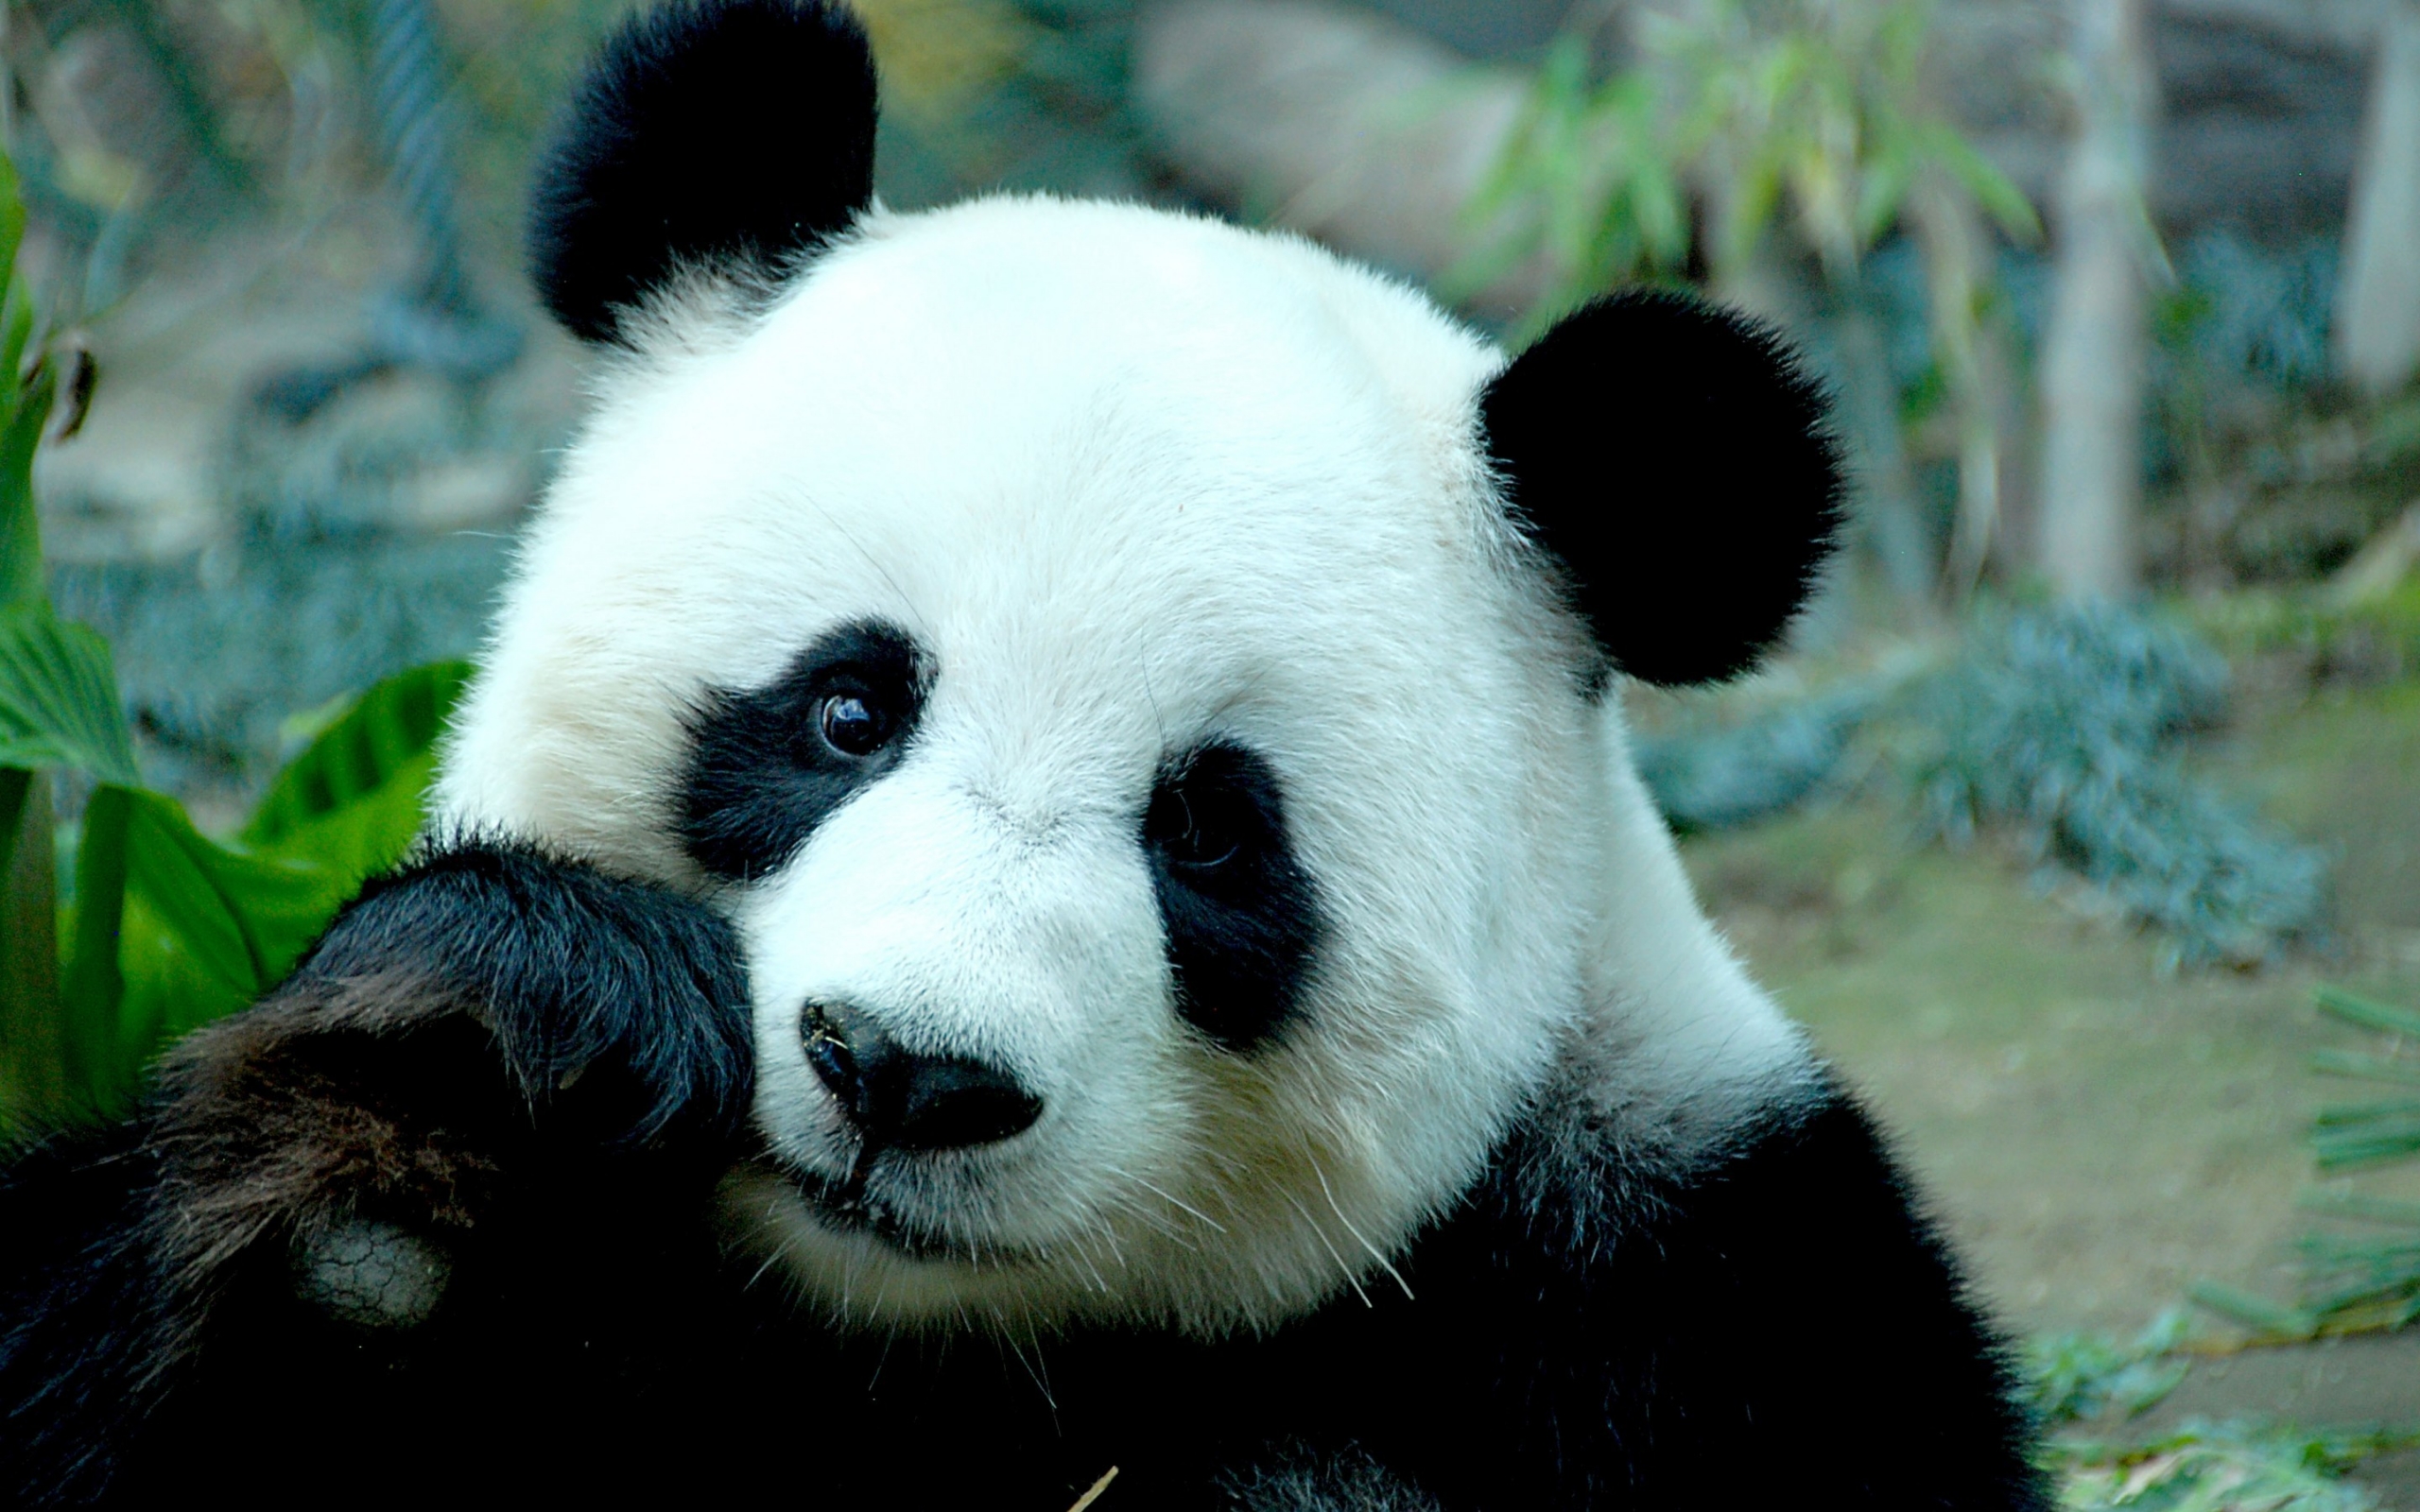 Sad Panda Bear for 2560 x 1600 widescreen resolution